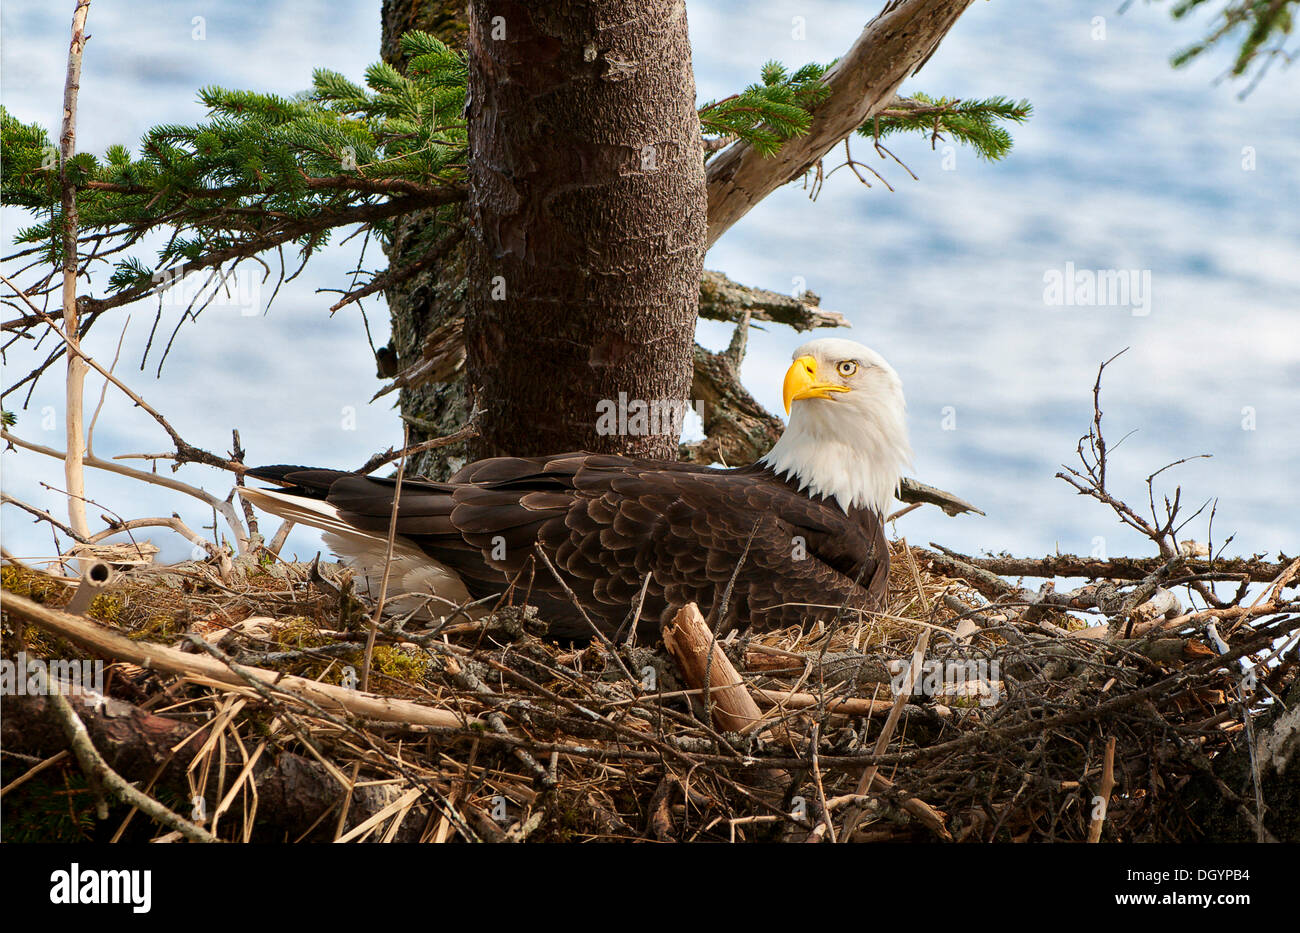 A nesting American Bald Eagle (Haliaeetus leucocephalus), Prince William Sound, Alaska, United States Stock Photo